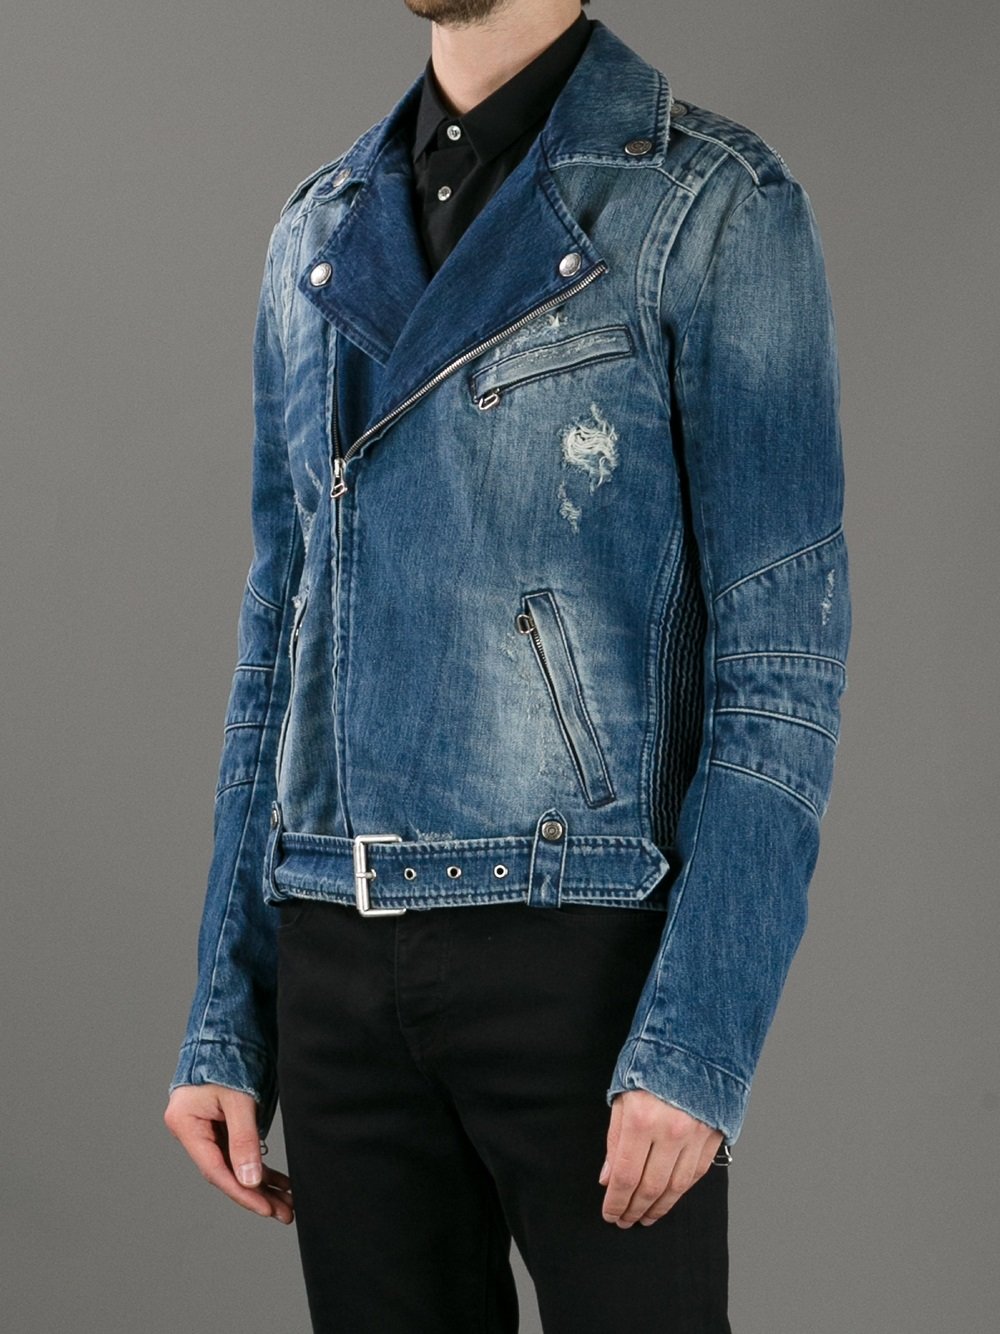 Balmain Jeans Jacket : Also set sale alerts and shop exclusive offers